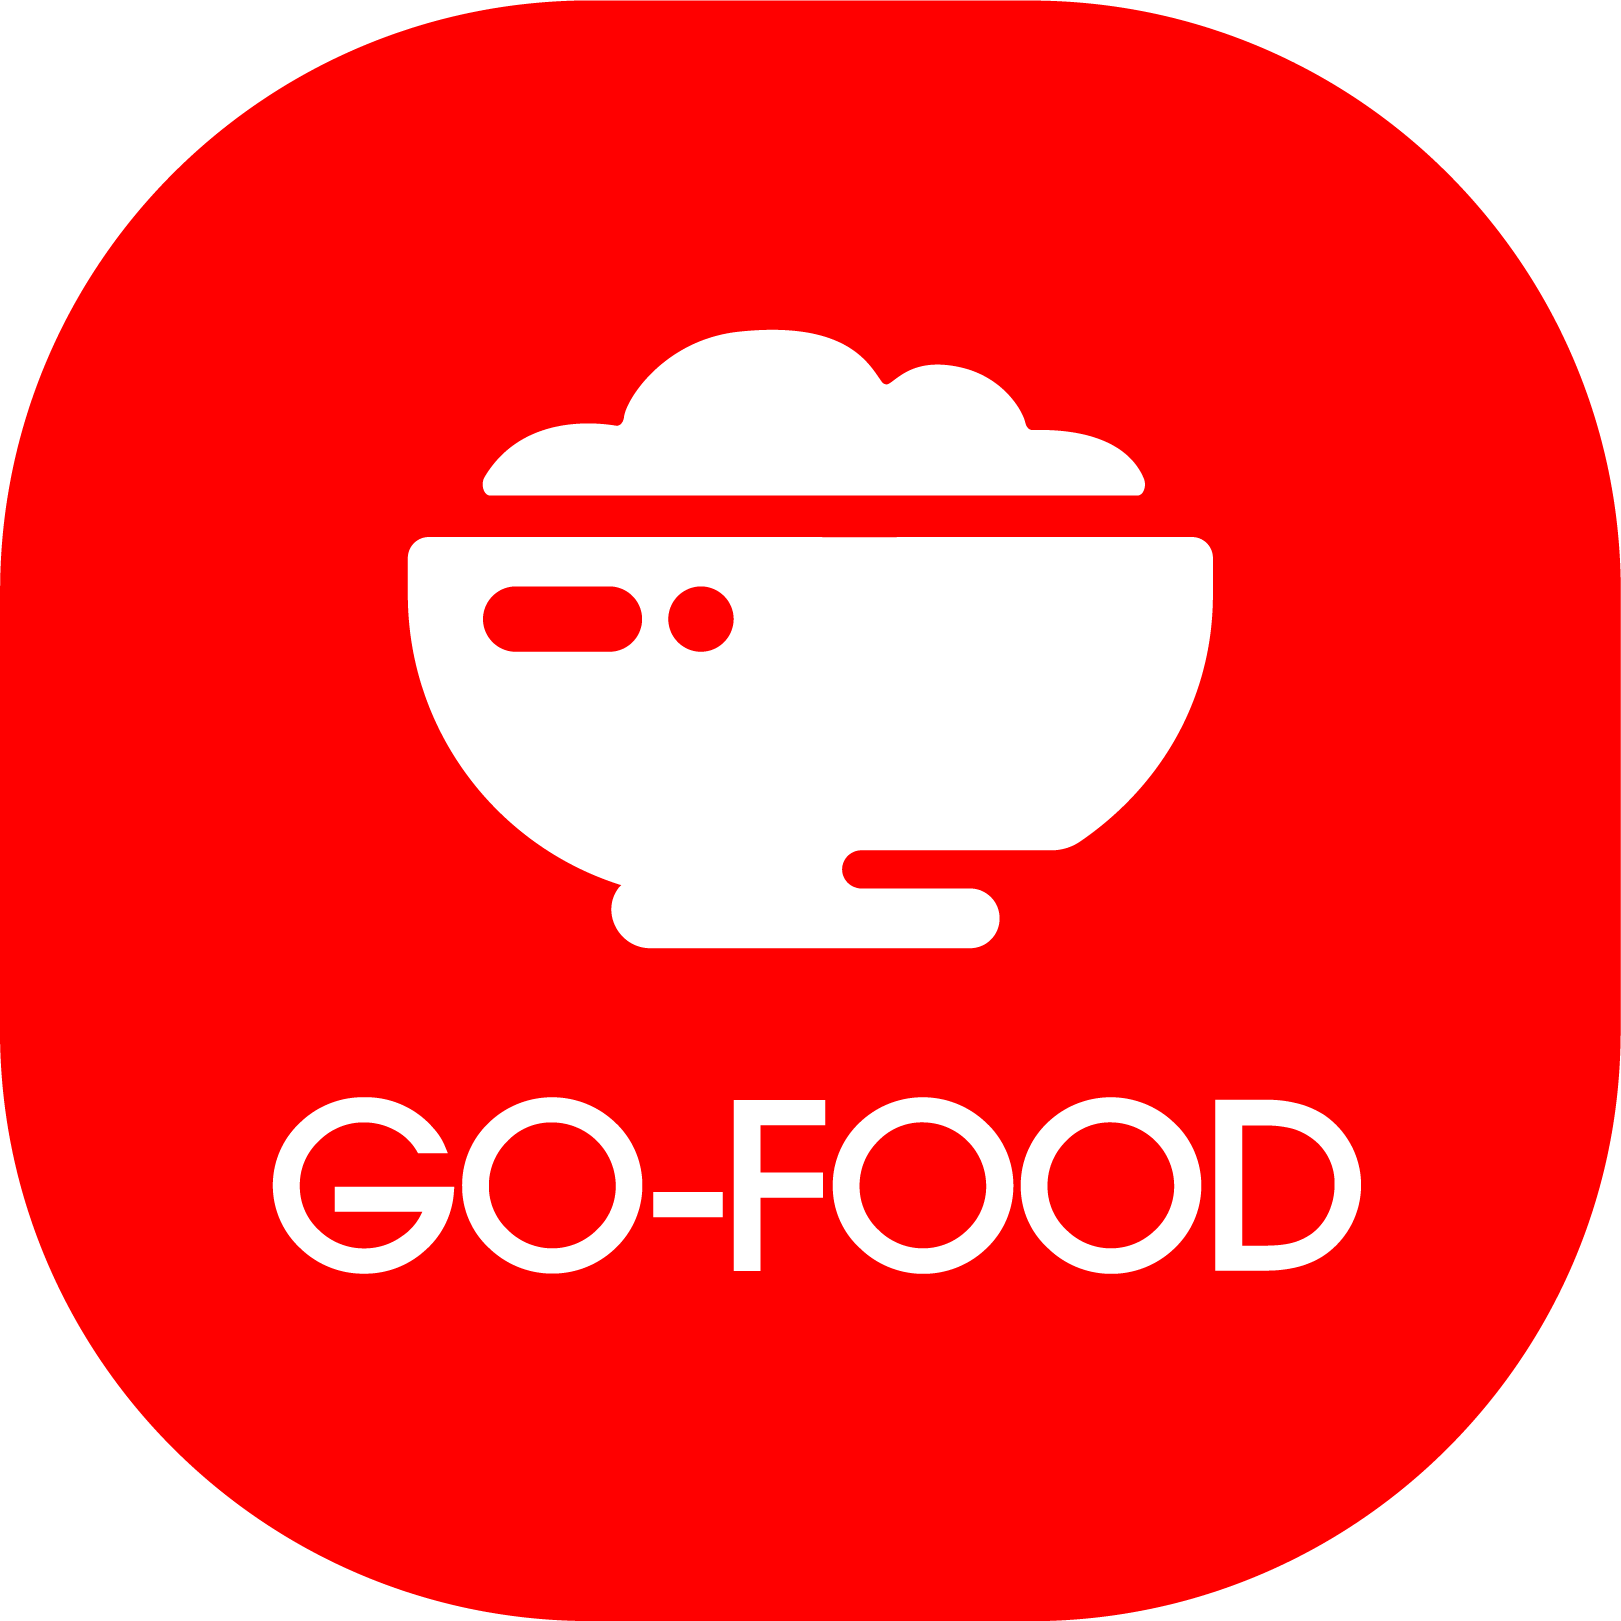 Go-food